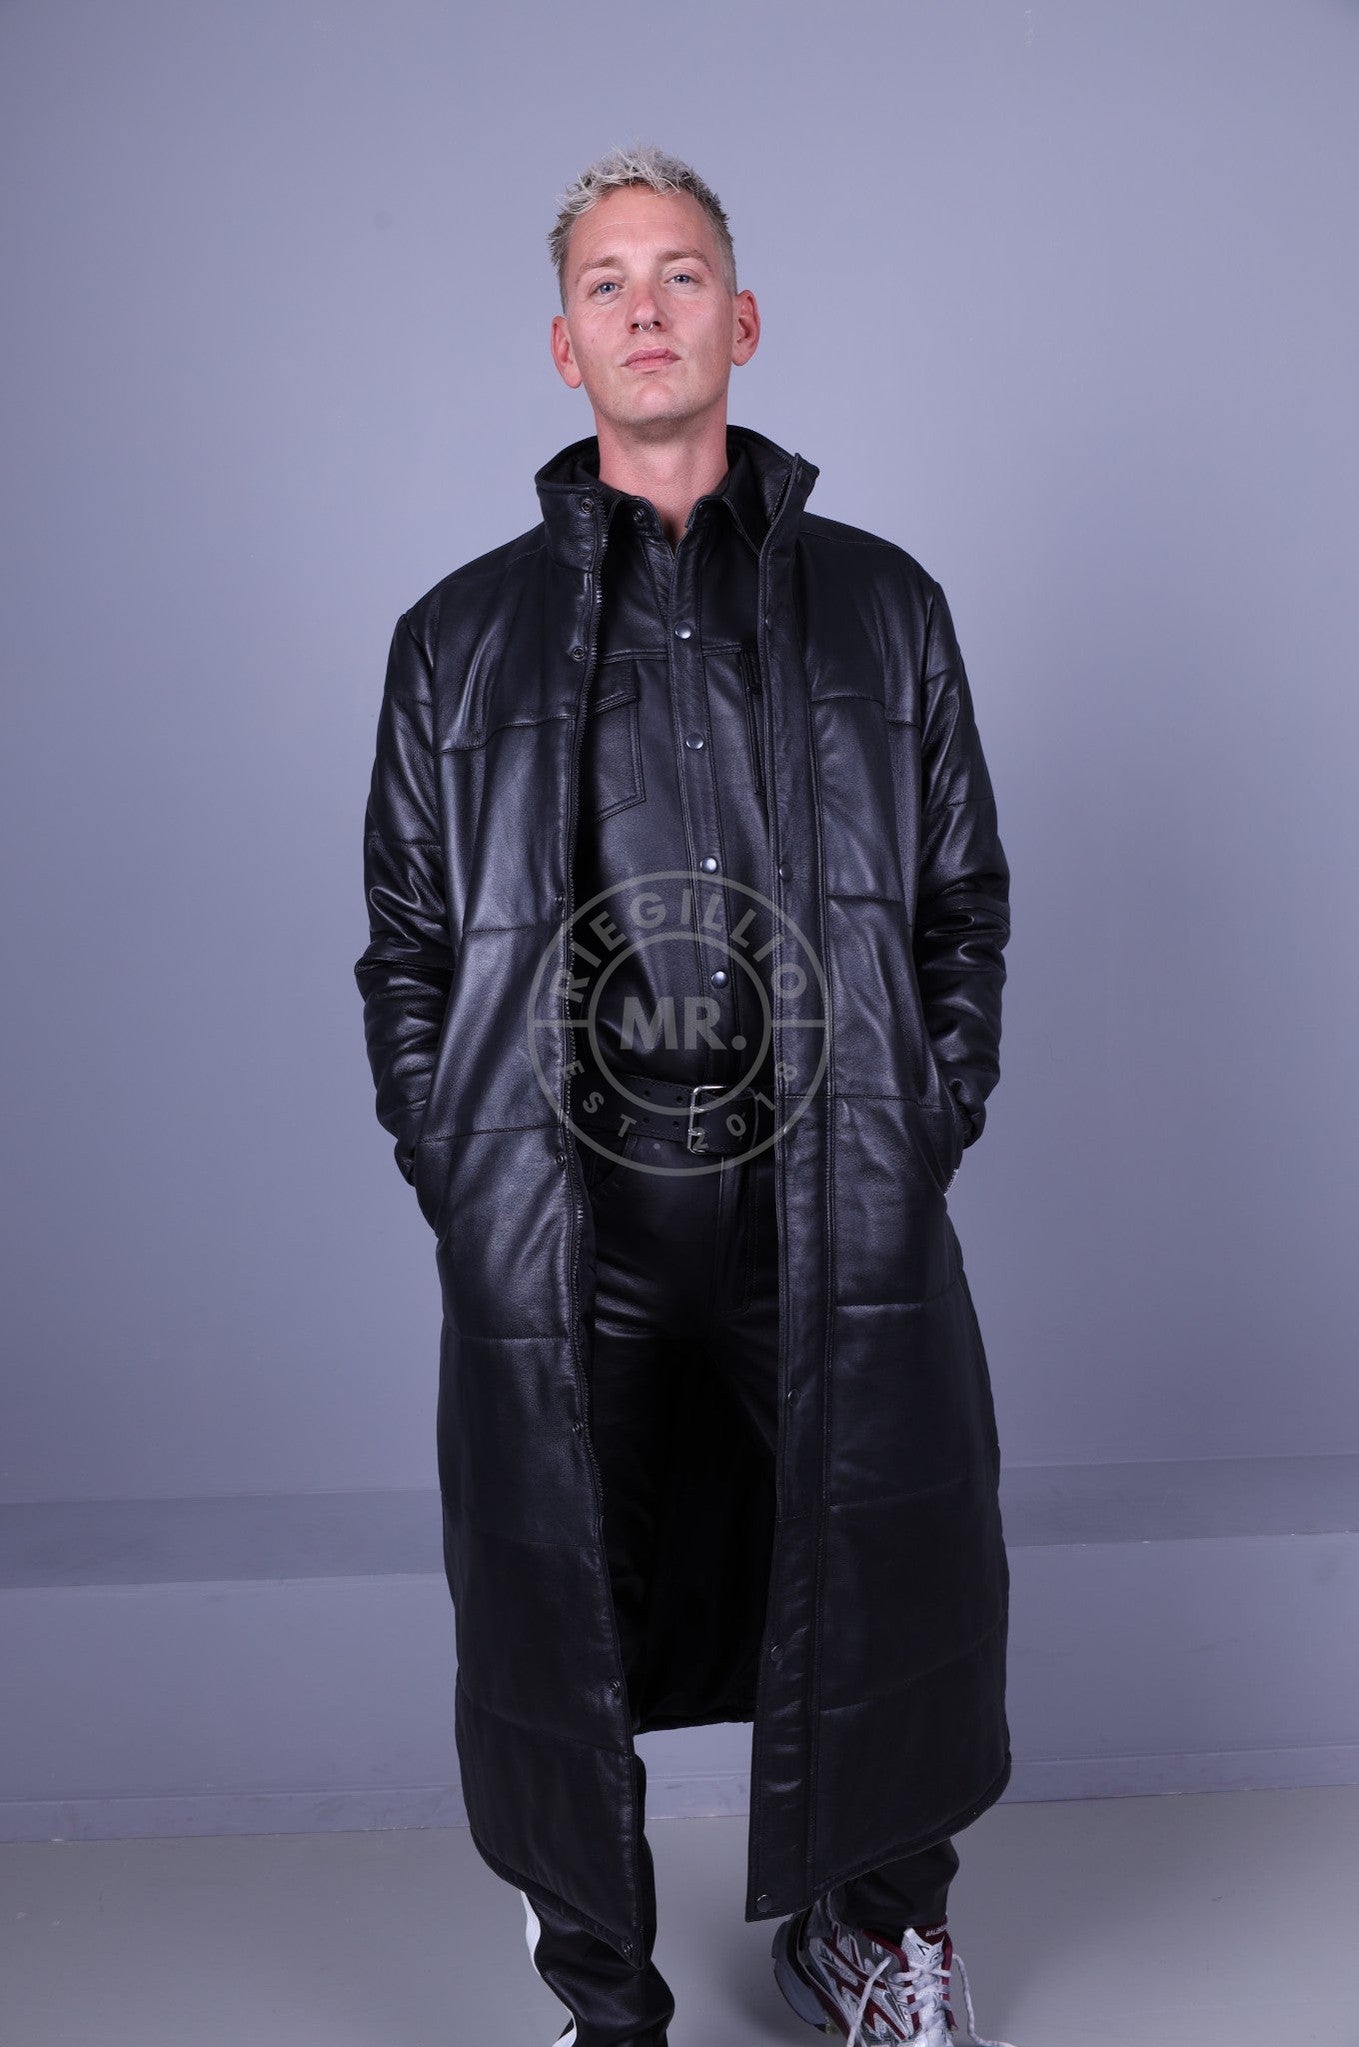 Black Leather Long Winterjacket at MR. Riegillio